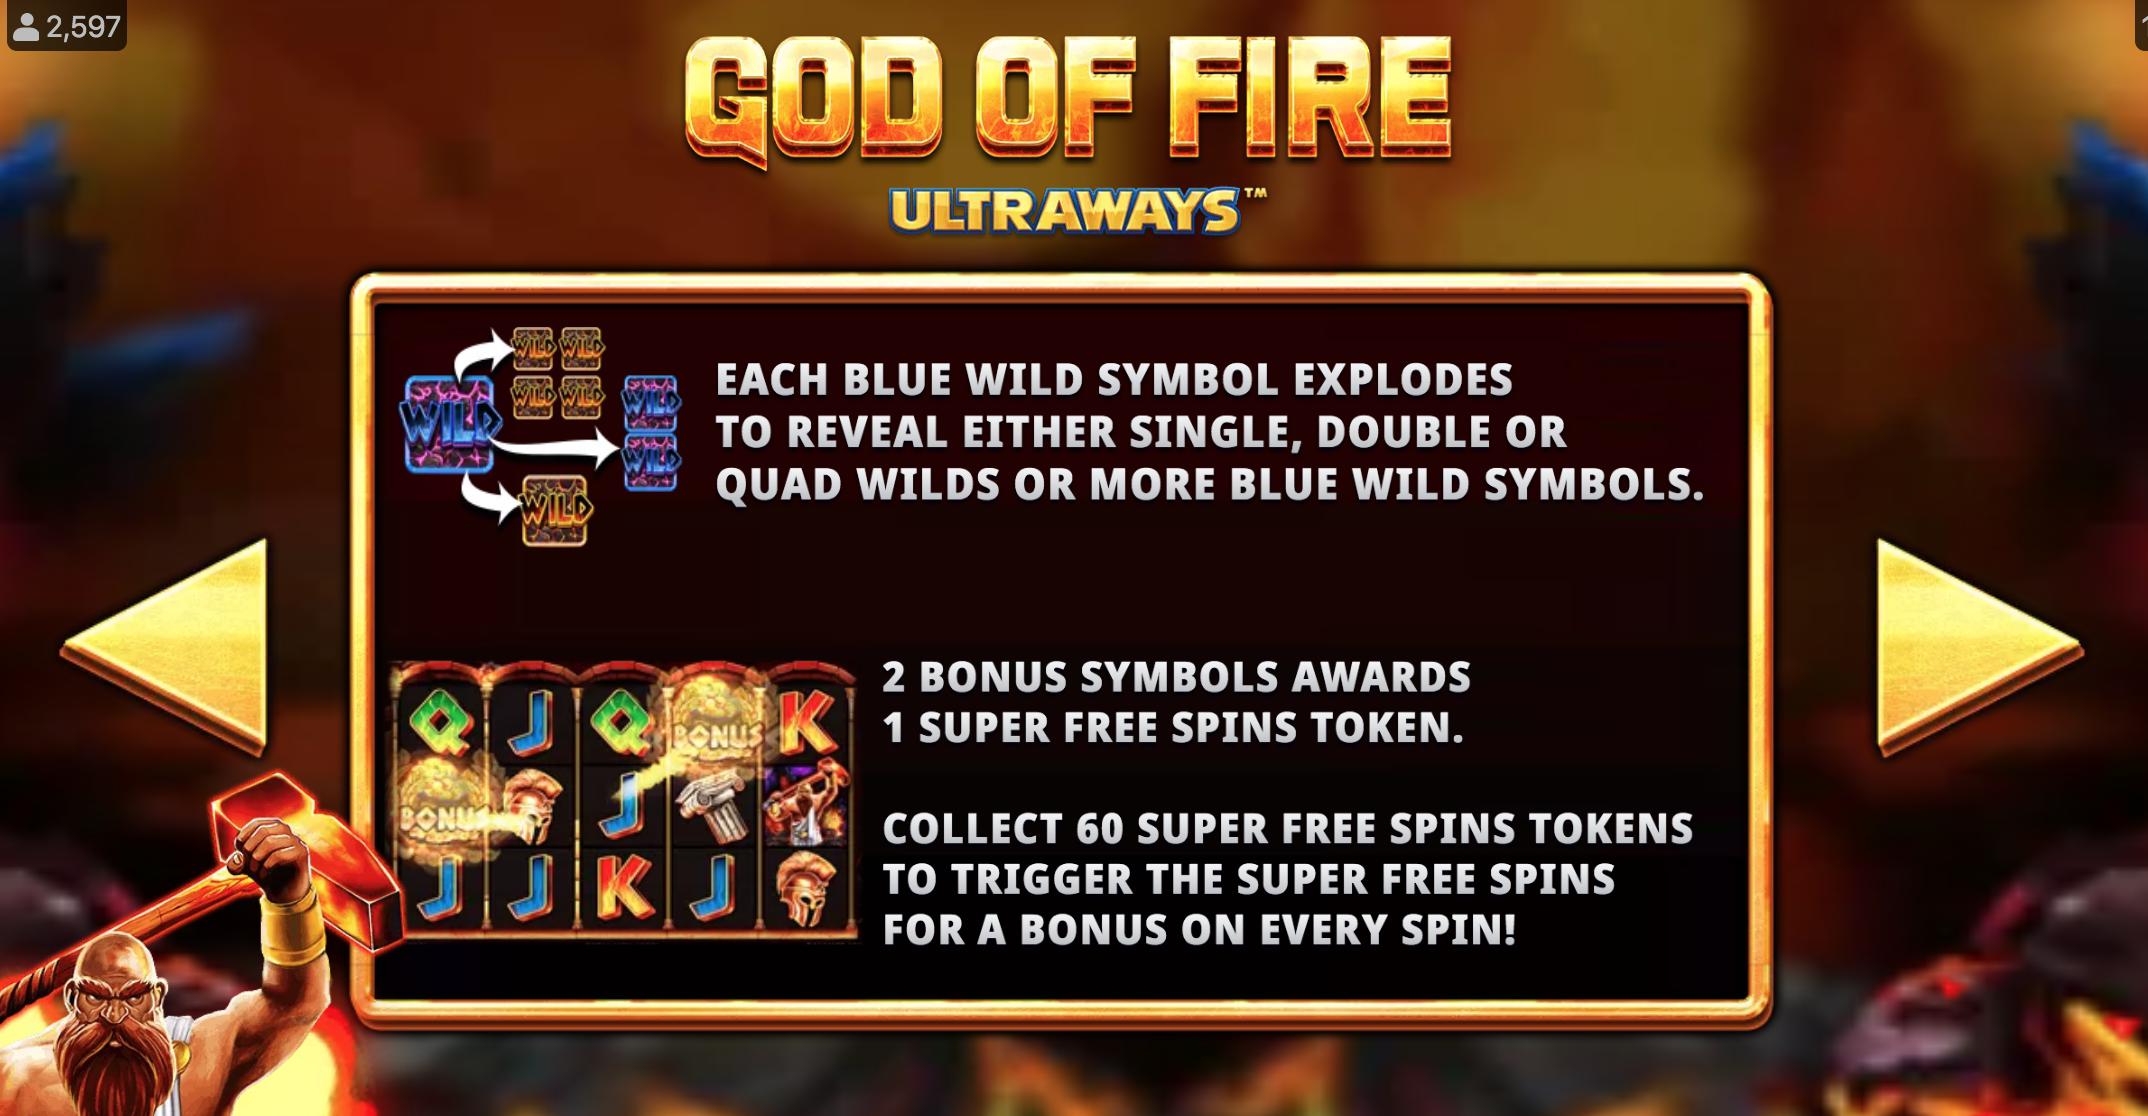 God of fire Ultraways tutorial